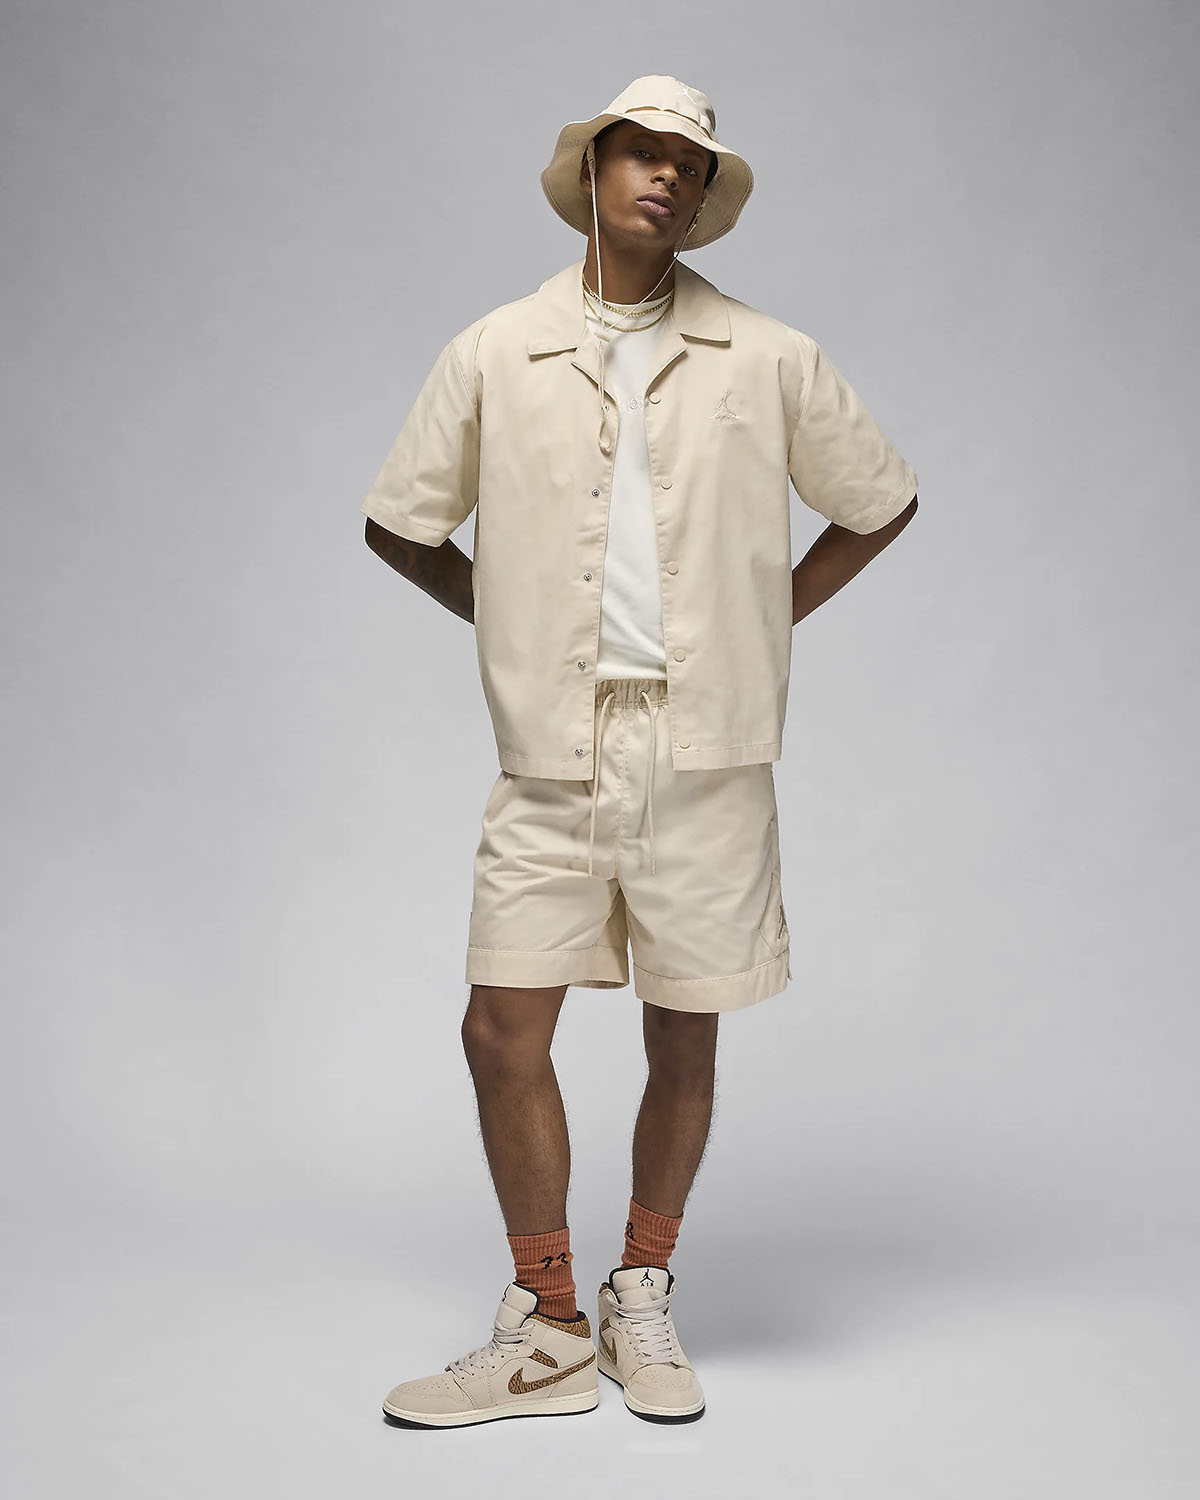 jordan sneakers Legend Light Brown Shirt Shorts Hat Outfit